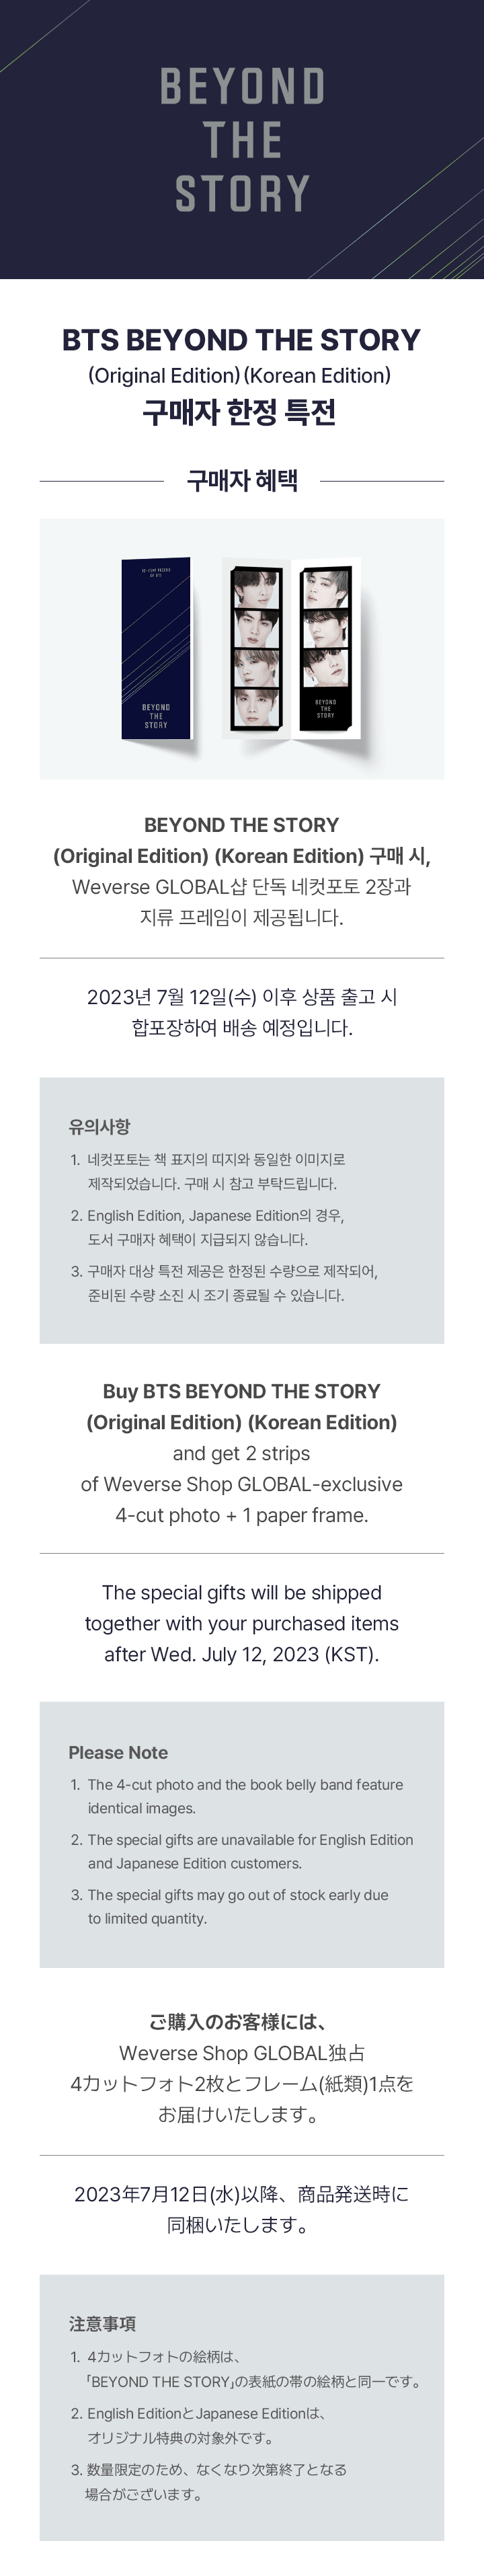 BTS Beyond the Story (Korean Edition)